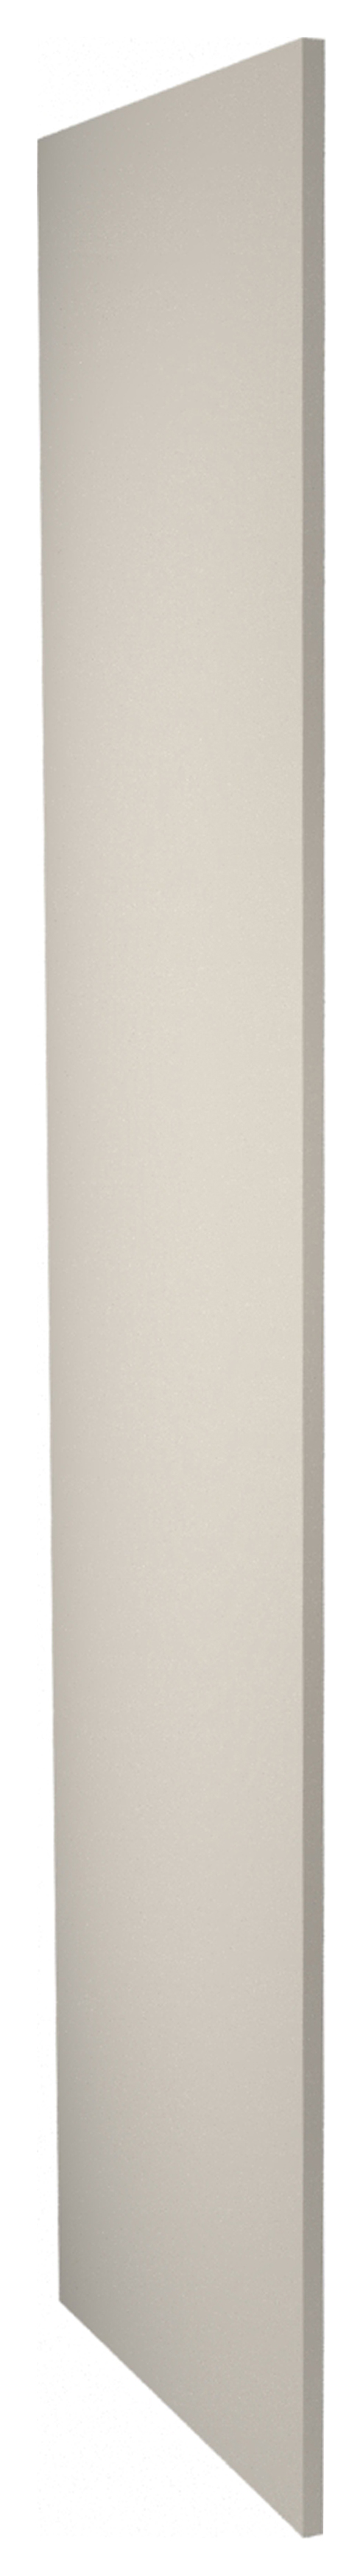 Wickes Ohio Stone Shaker Decor Tall Panel - 18mm